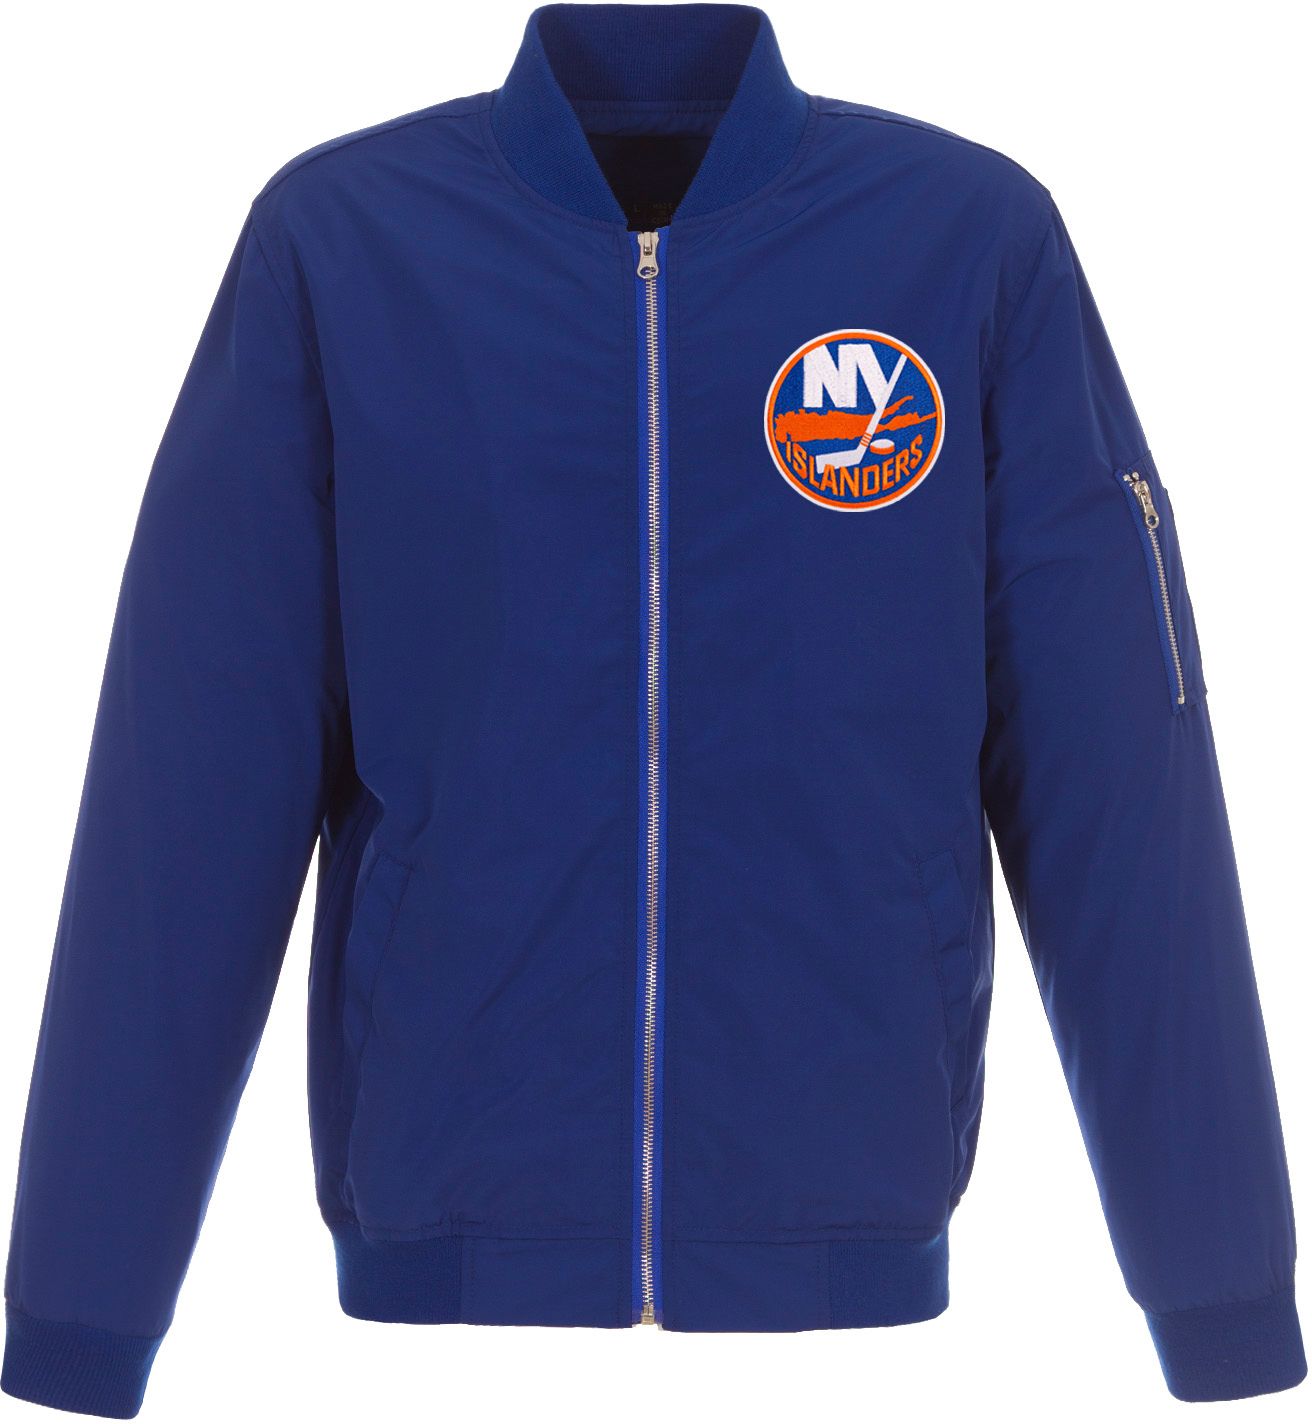 JH Design New York Islanders Blue Bomber Jacket